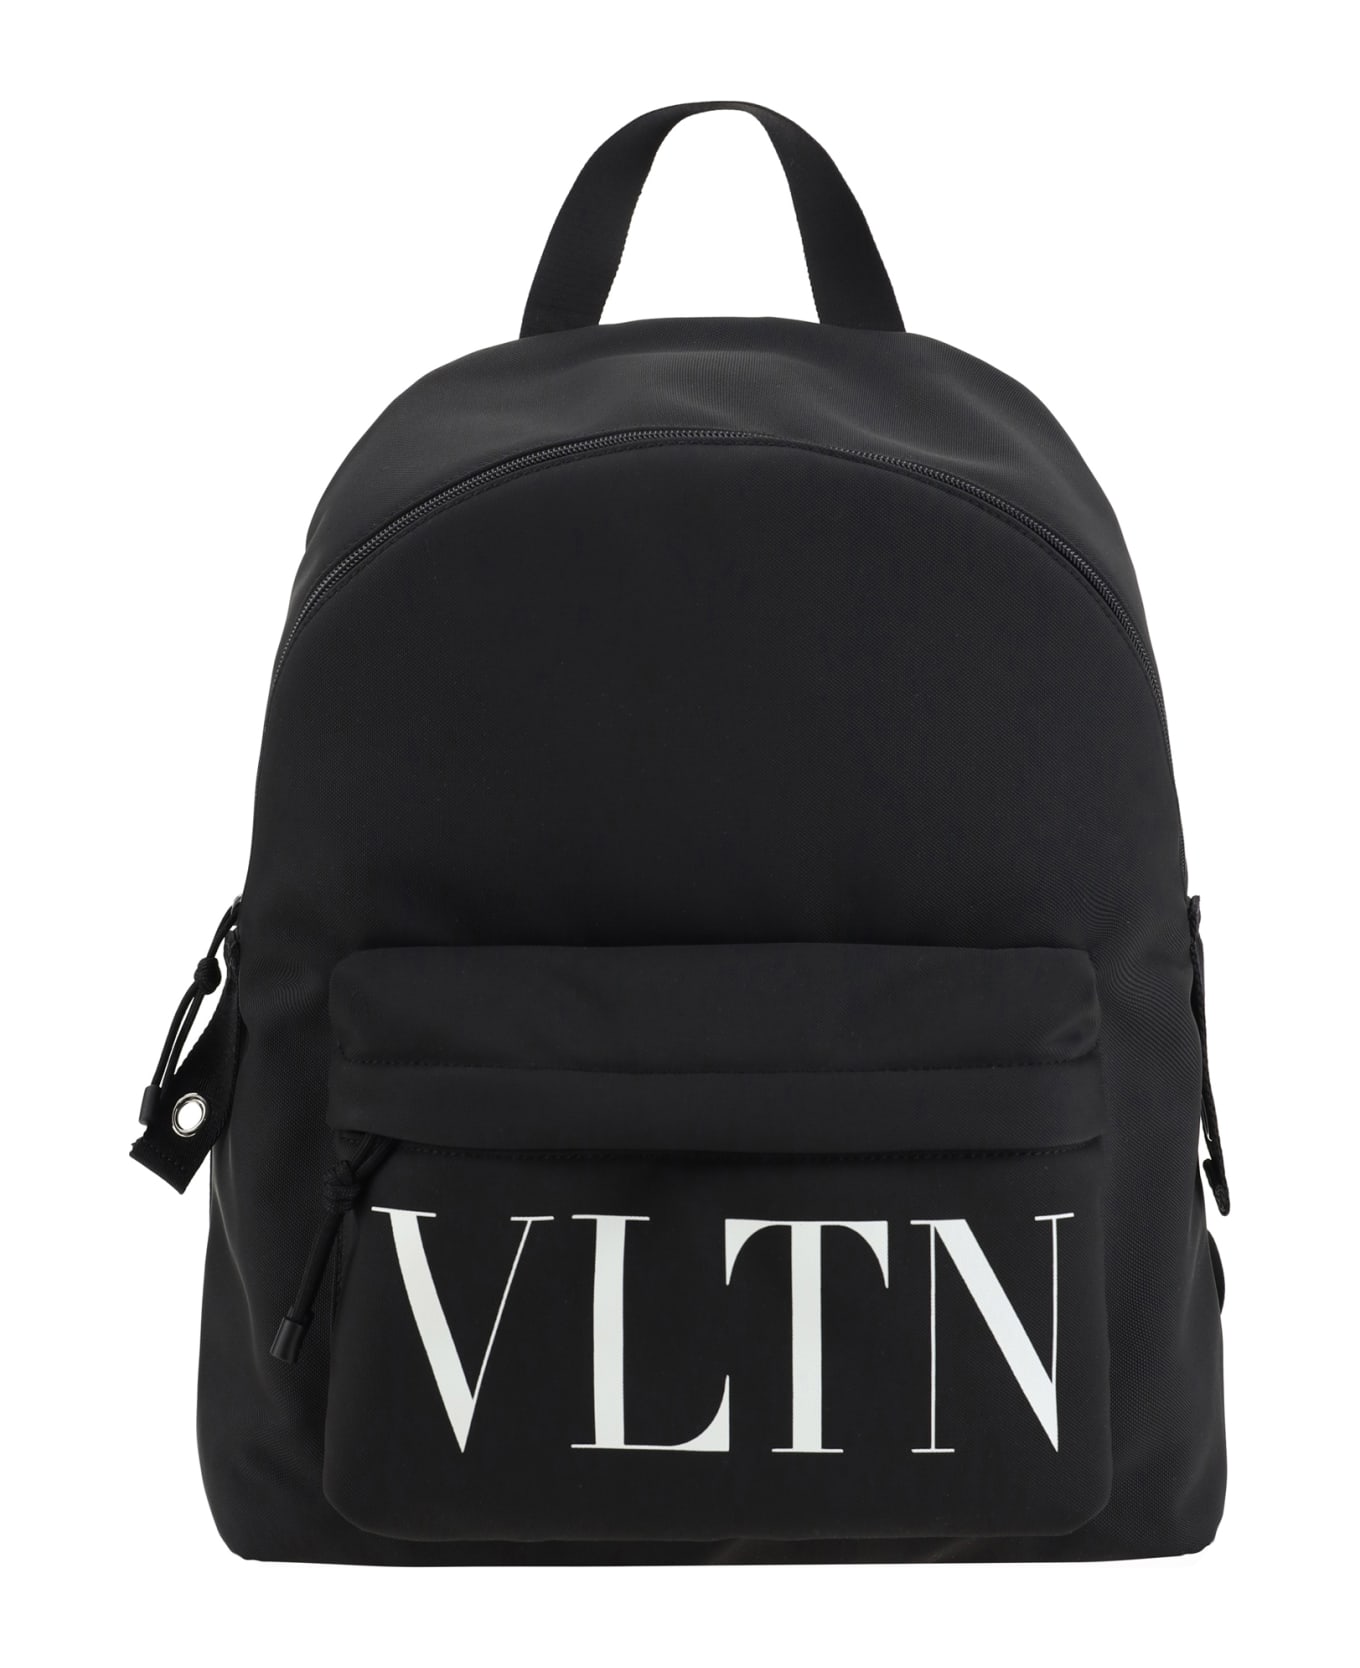 Valentino Garavani Vltn Backpack - Nero/bianco